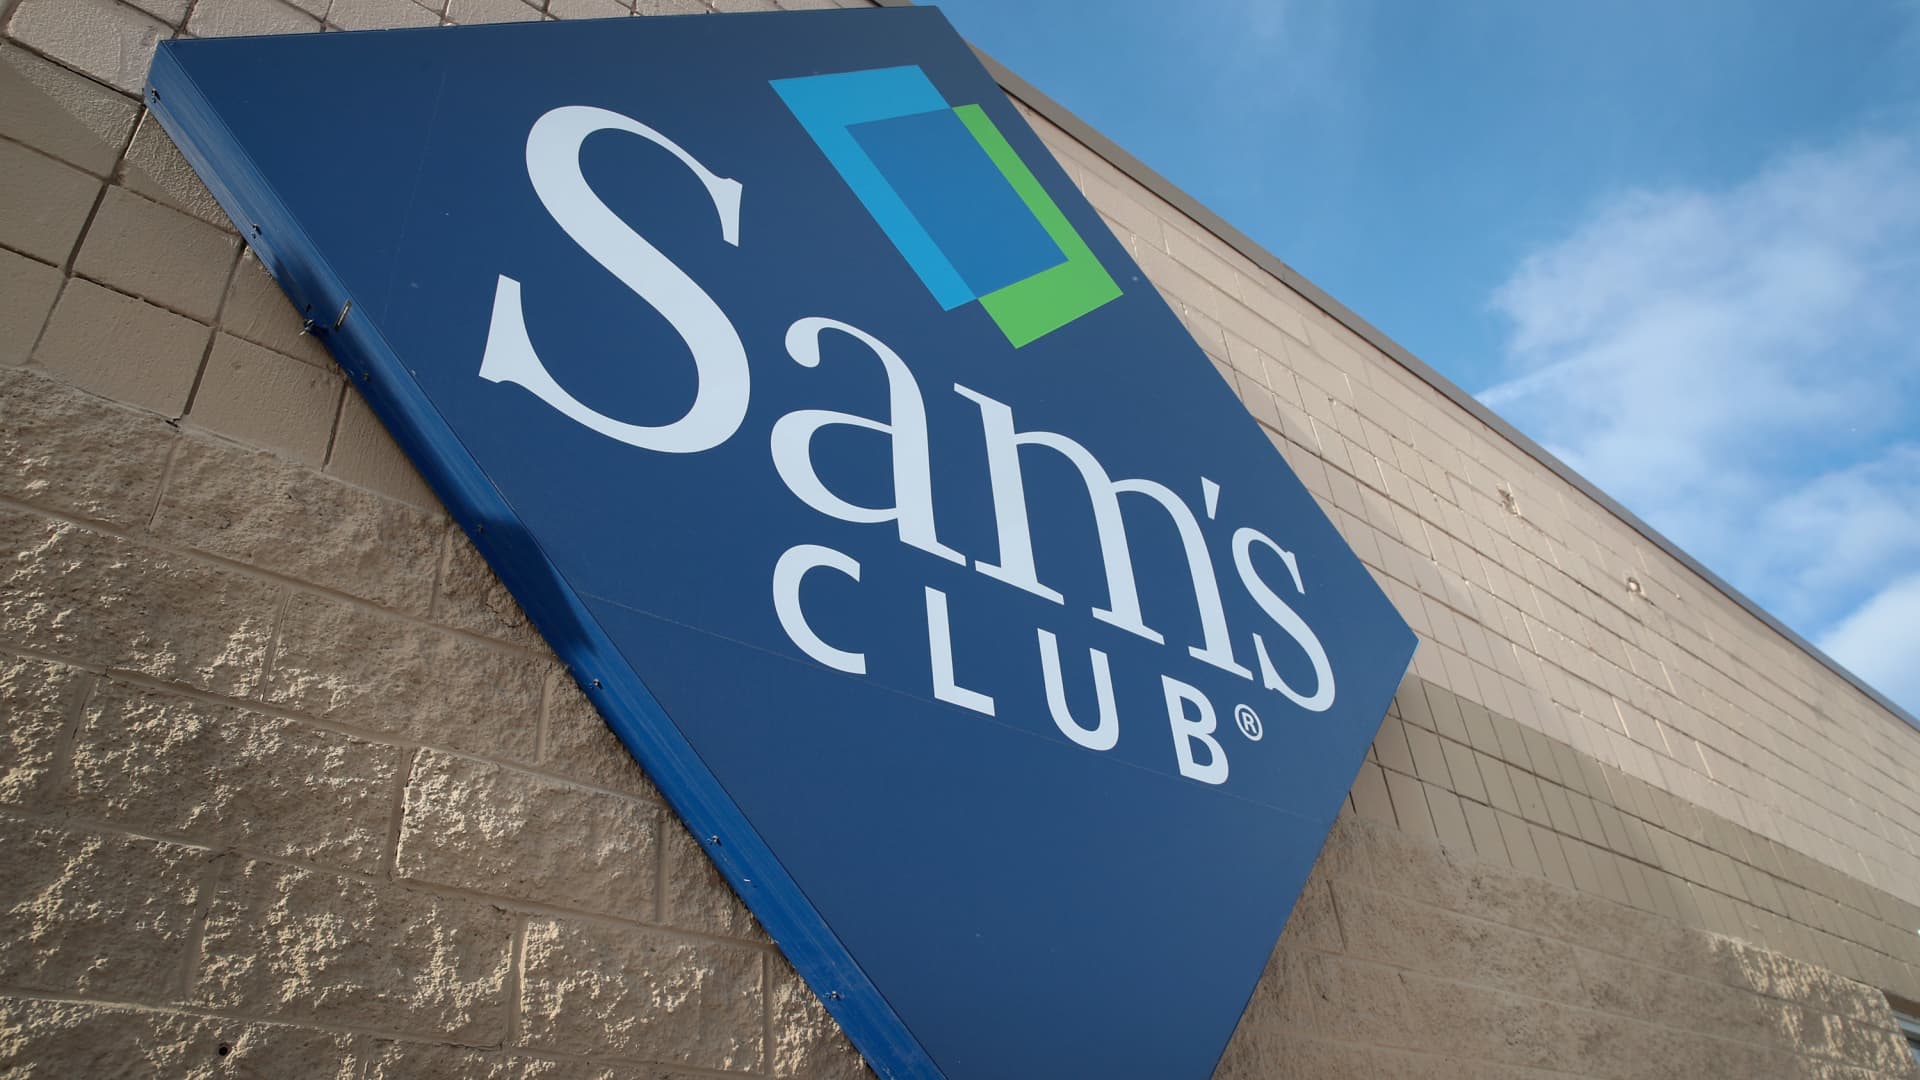 Walmartowned Sam’s Club raises annual membership fee for the first